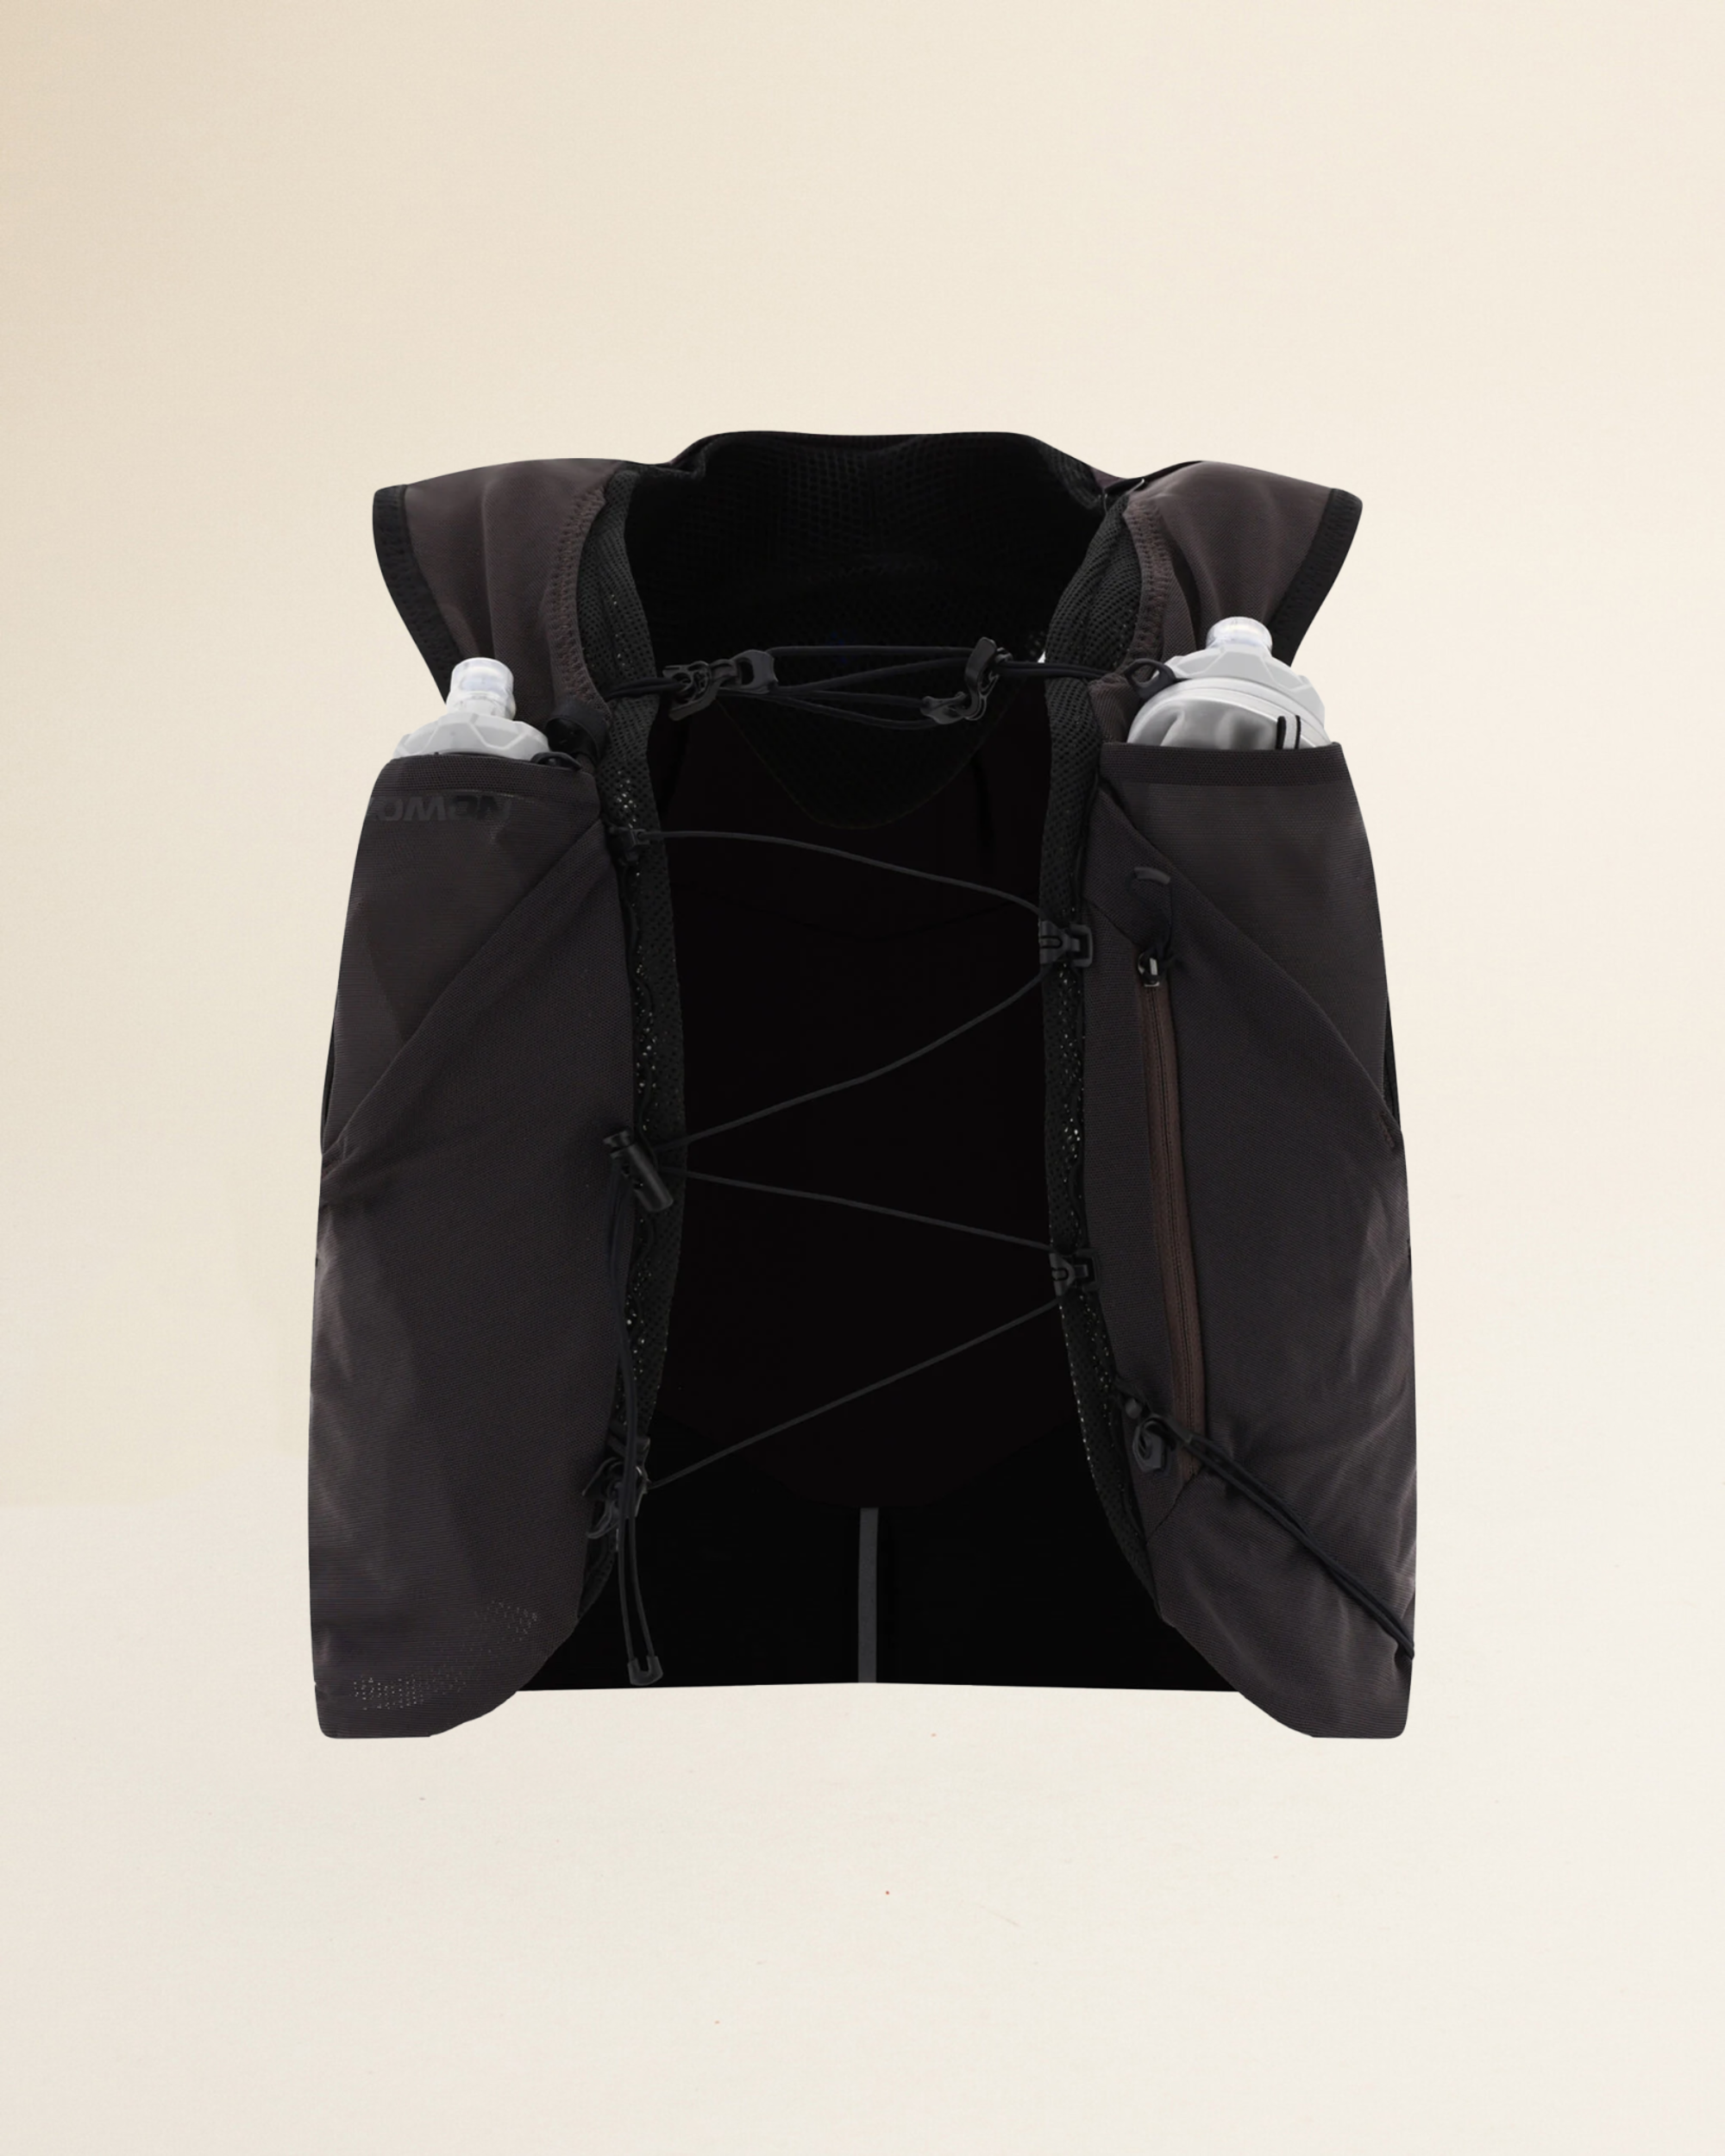 Salomon ADV Skin 5 Backpack - Shale